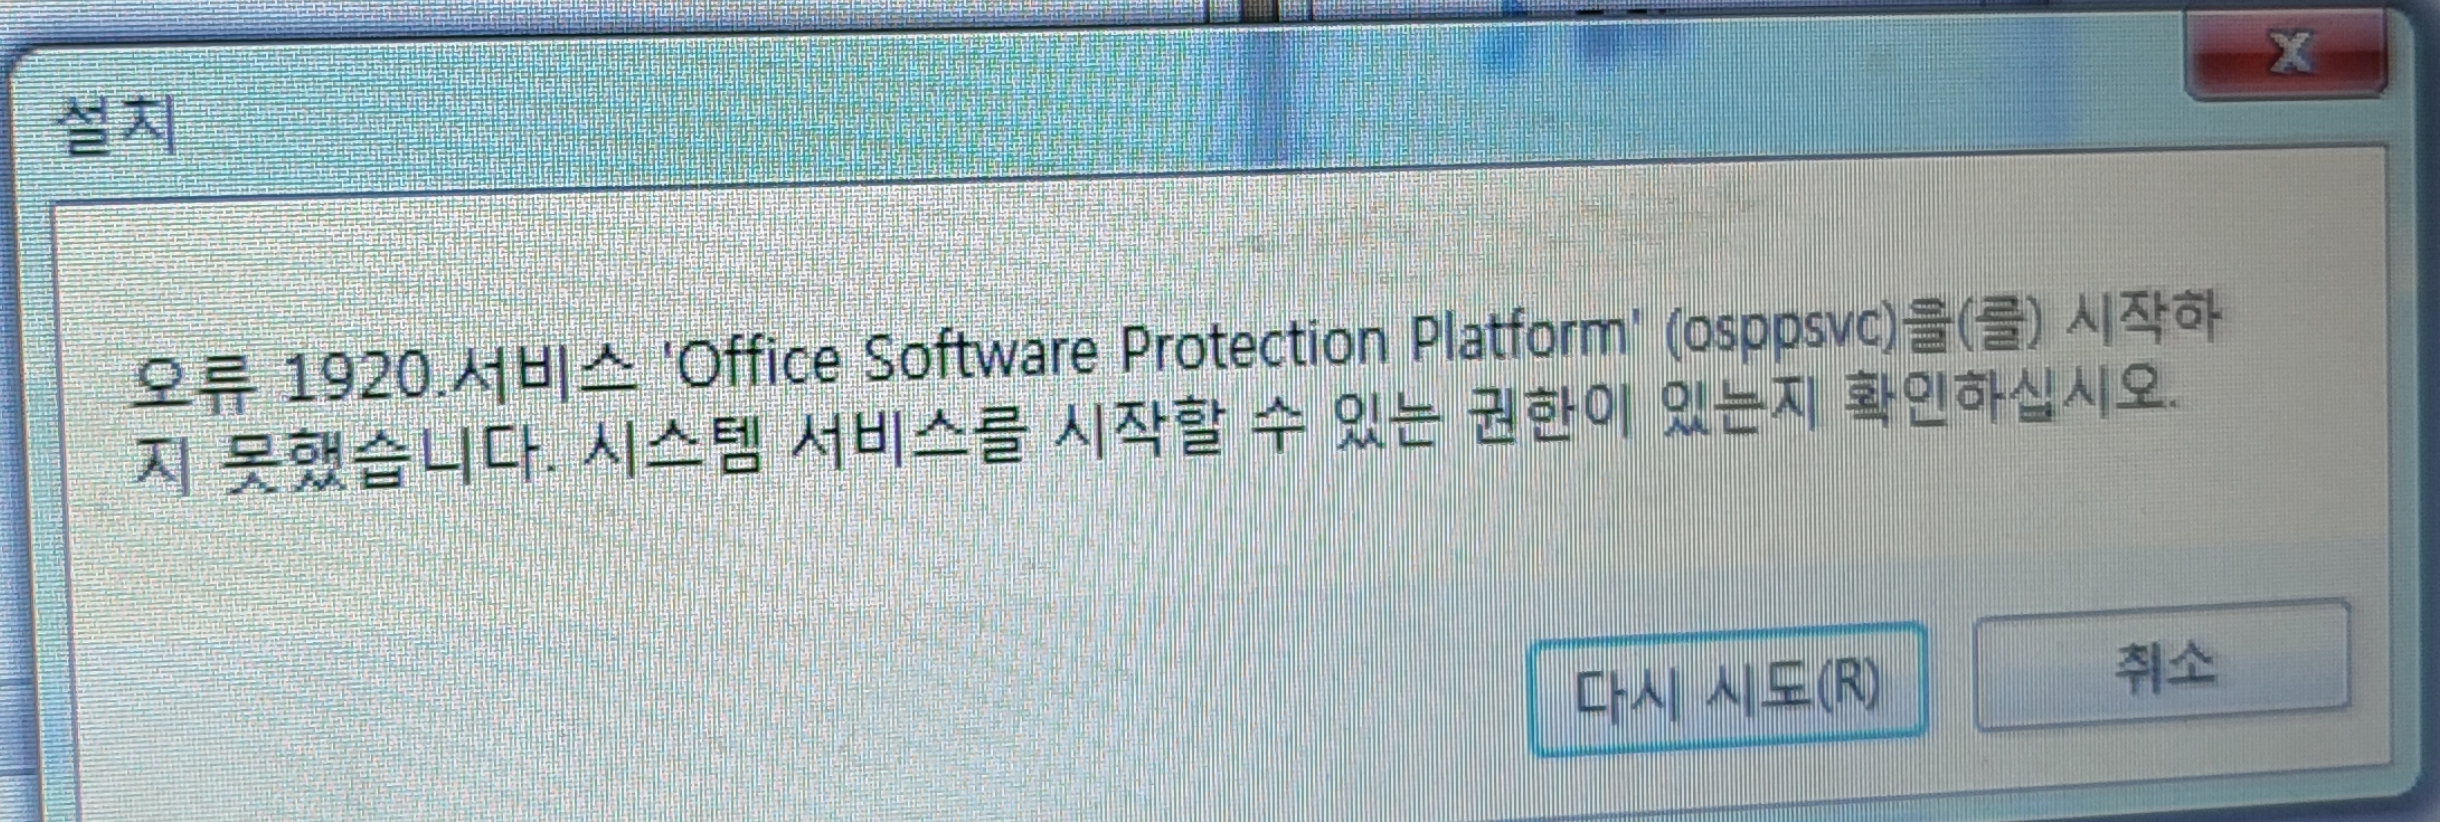 office software protection platform osppsvc